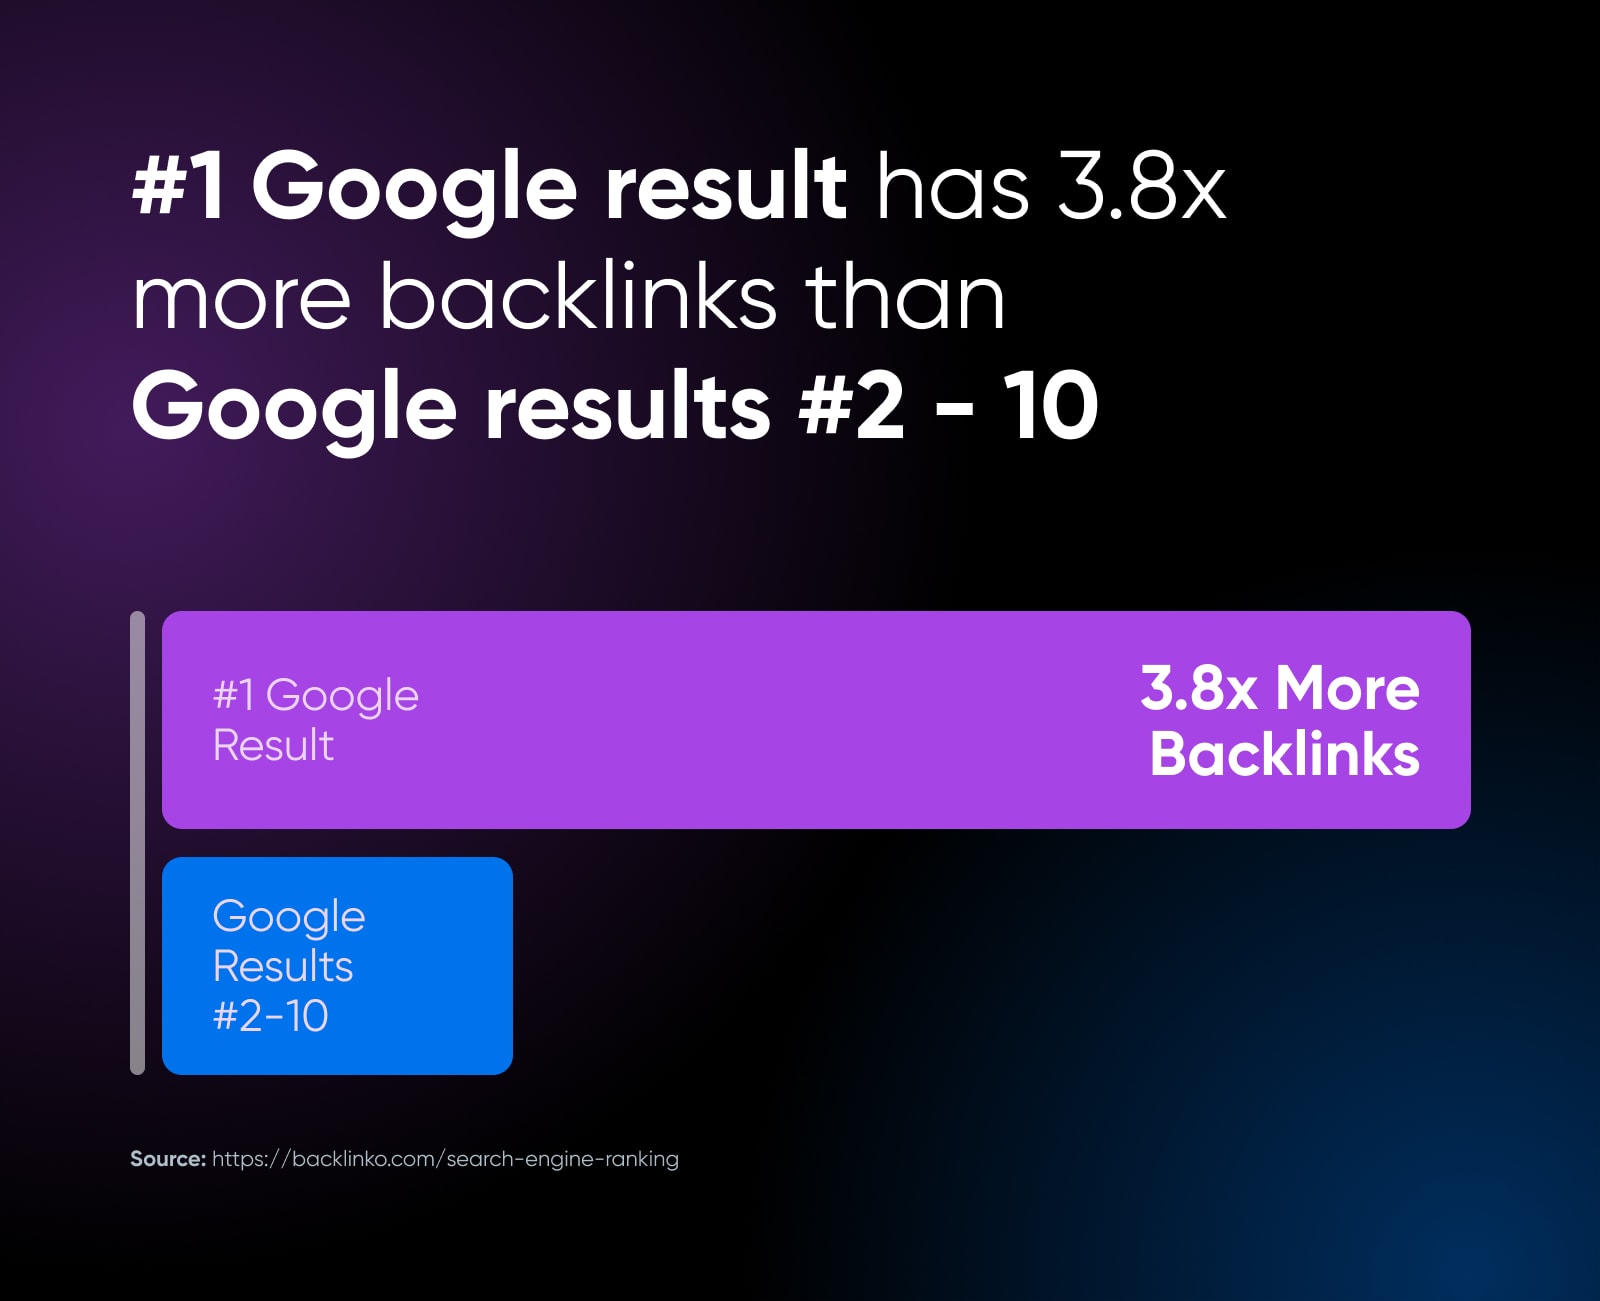 Top results on Google have more backlinks